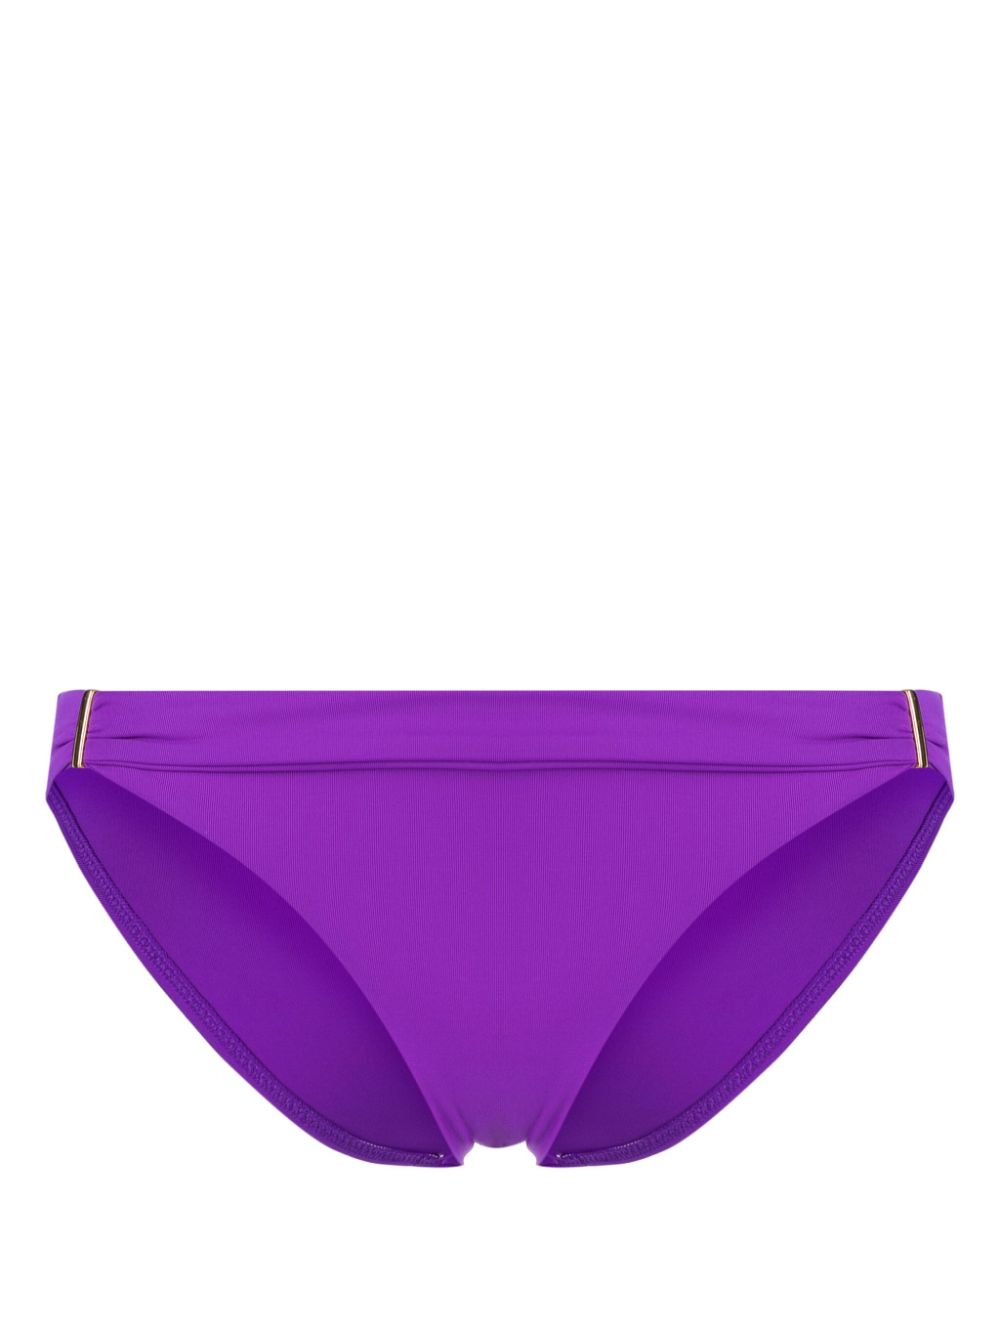 Melissa Odabash Positano embellished bikini bottoms - Purple von Melissa Odabash